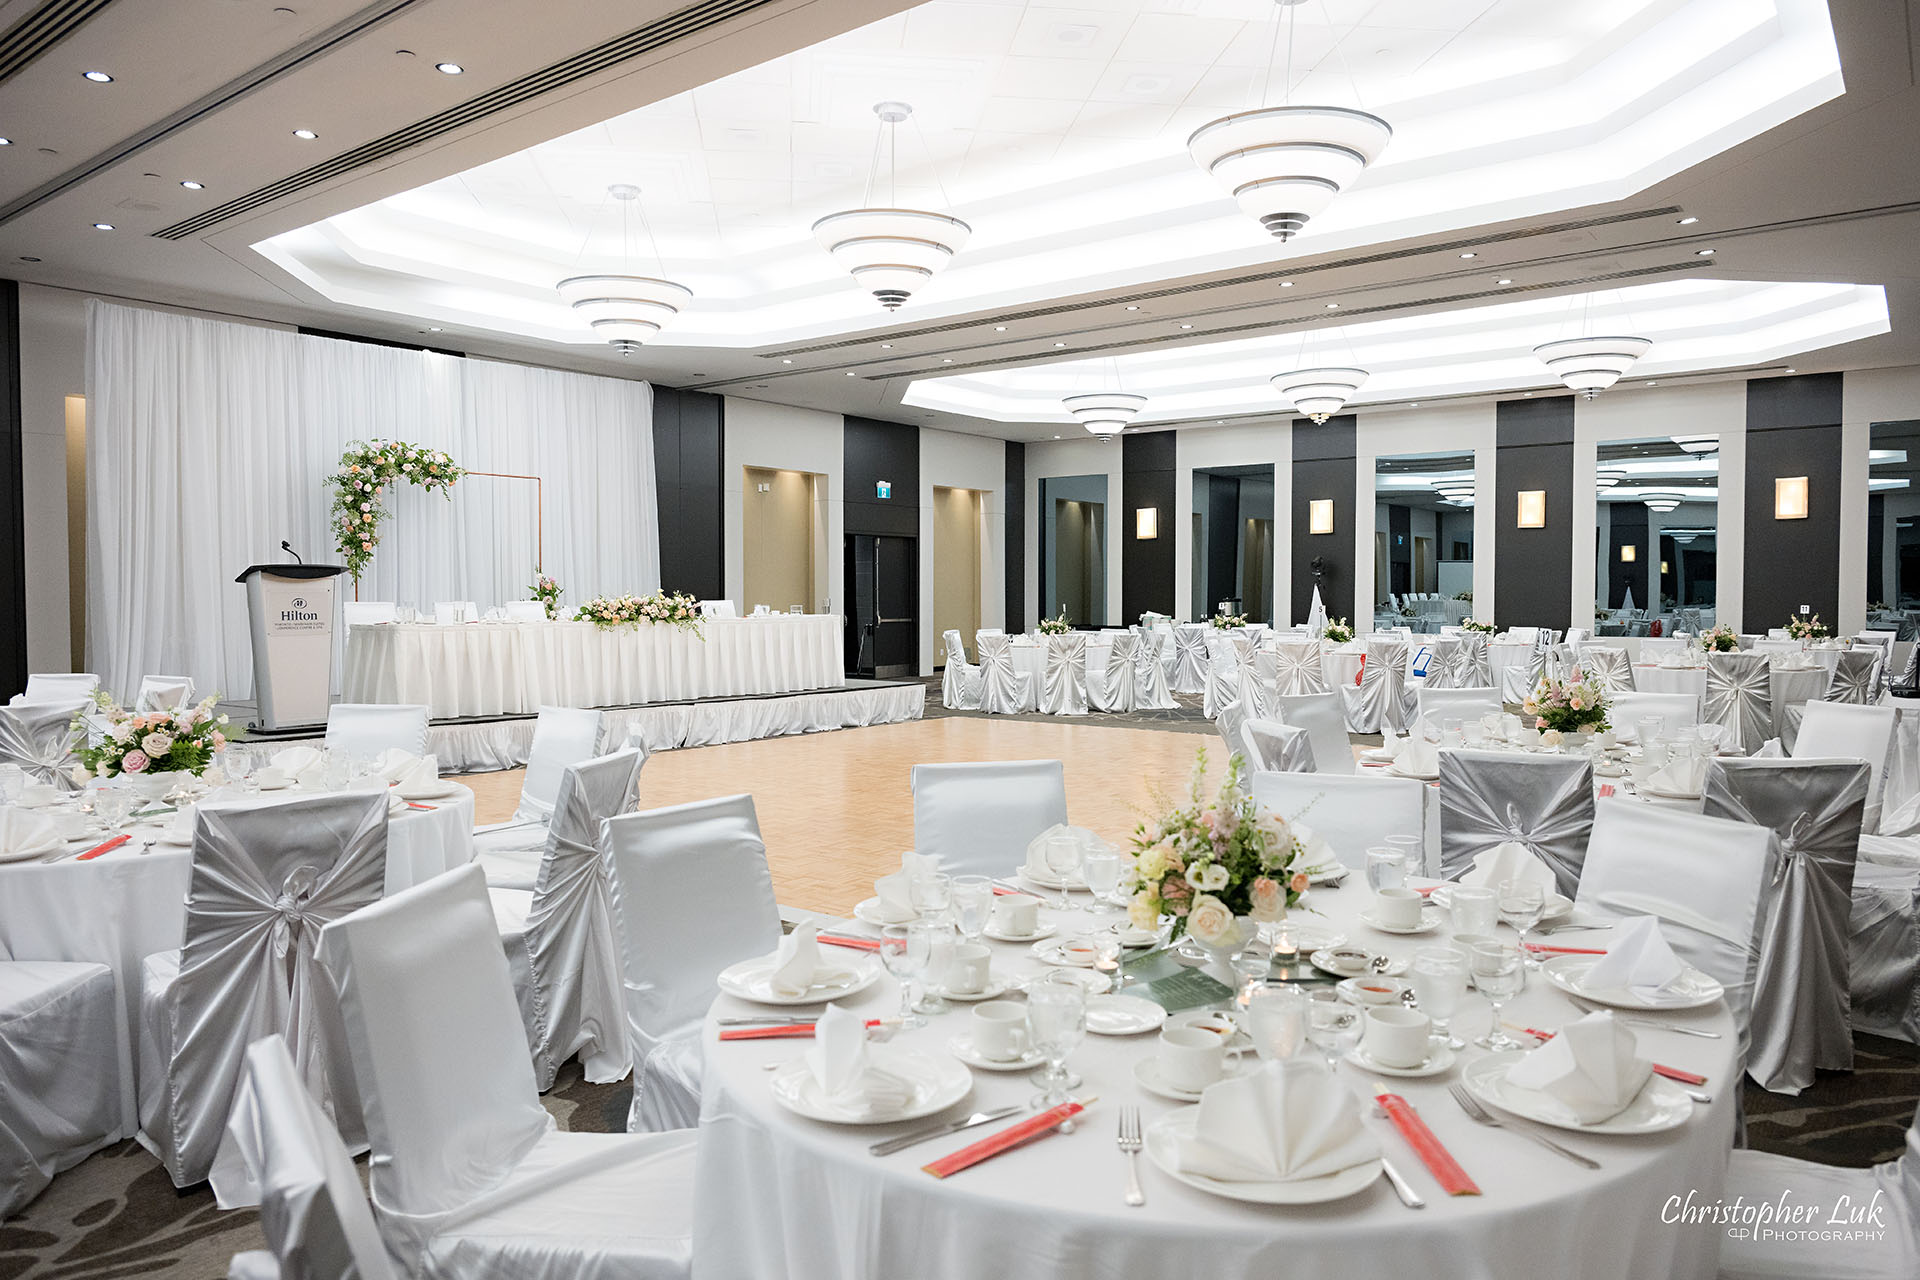 Hilton Suites Markham Hotel Chinese Wedding Photographer Harvey Tam Rovey Catering Floret Florist Flowers Decor 